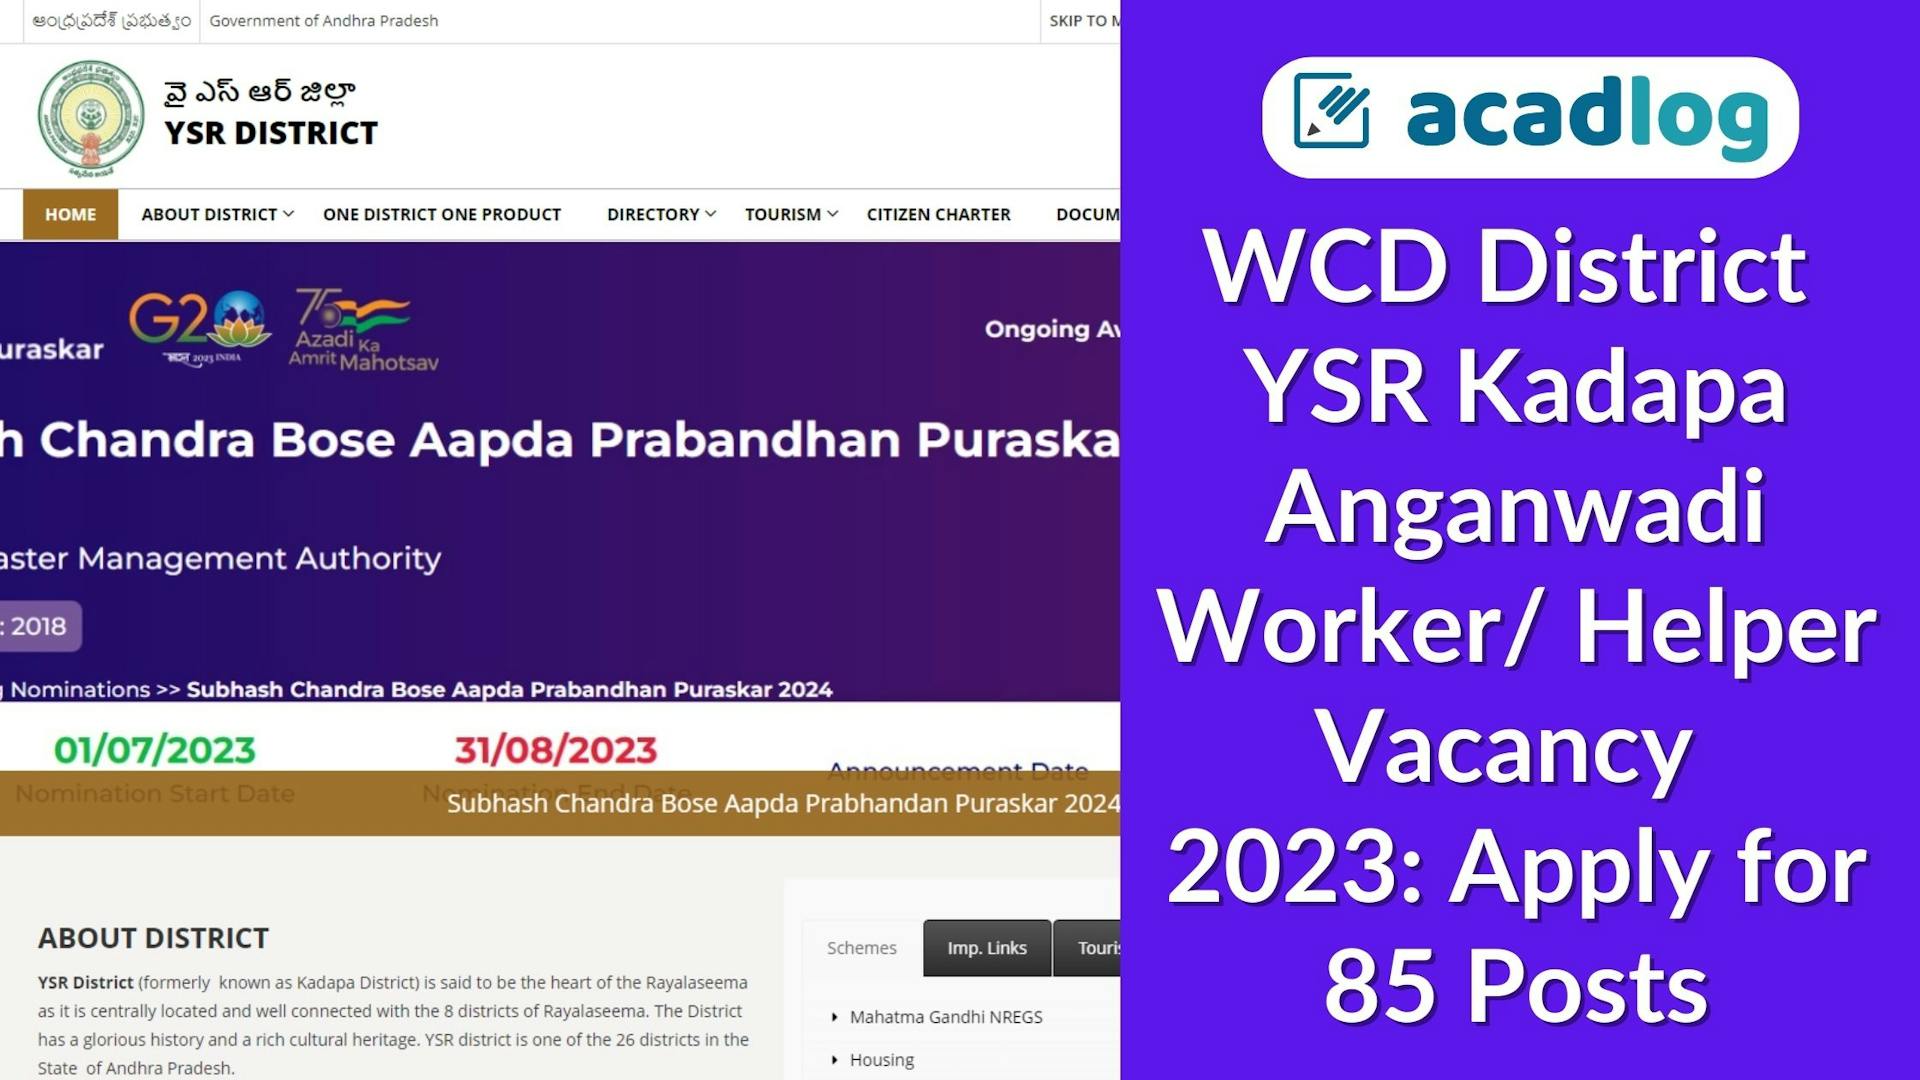 WCD District YSR Kadapa Anganwadi Worker/ Helper Vacancy 2023: Apply for 85 Posts